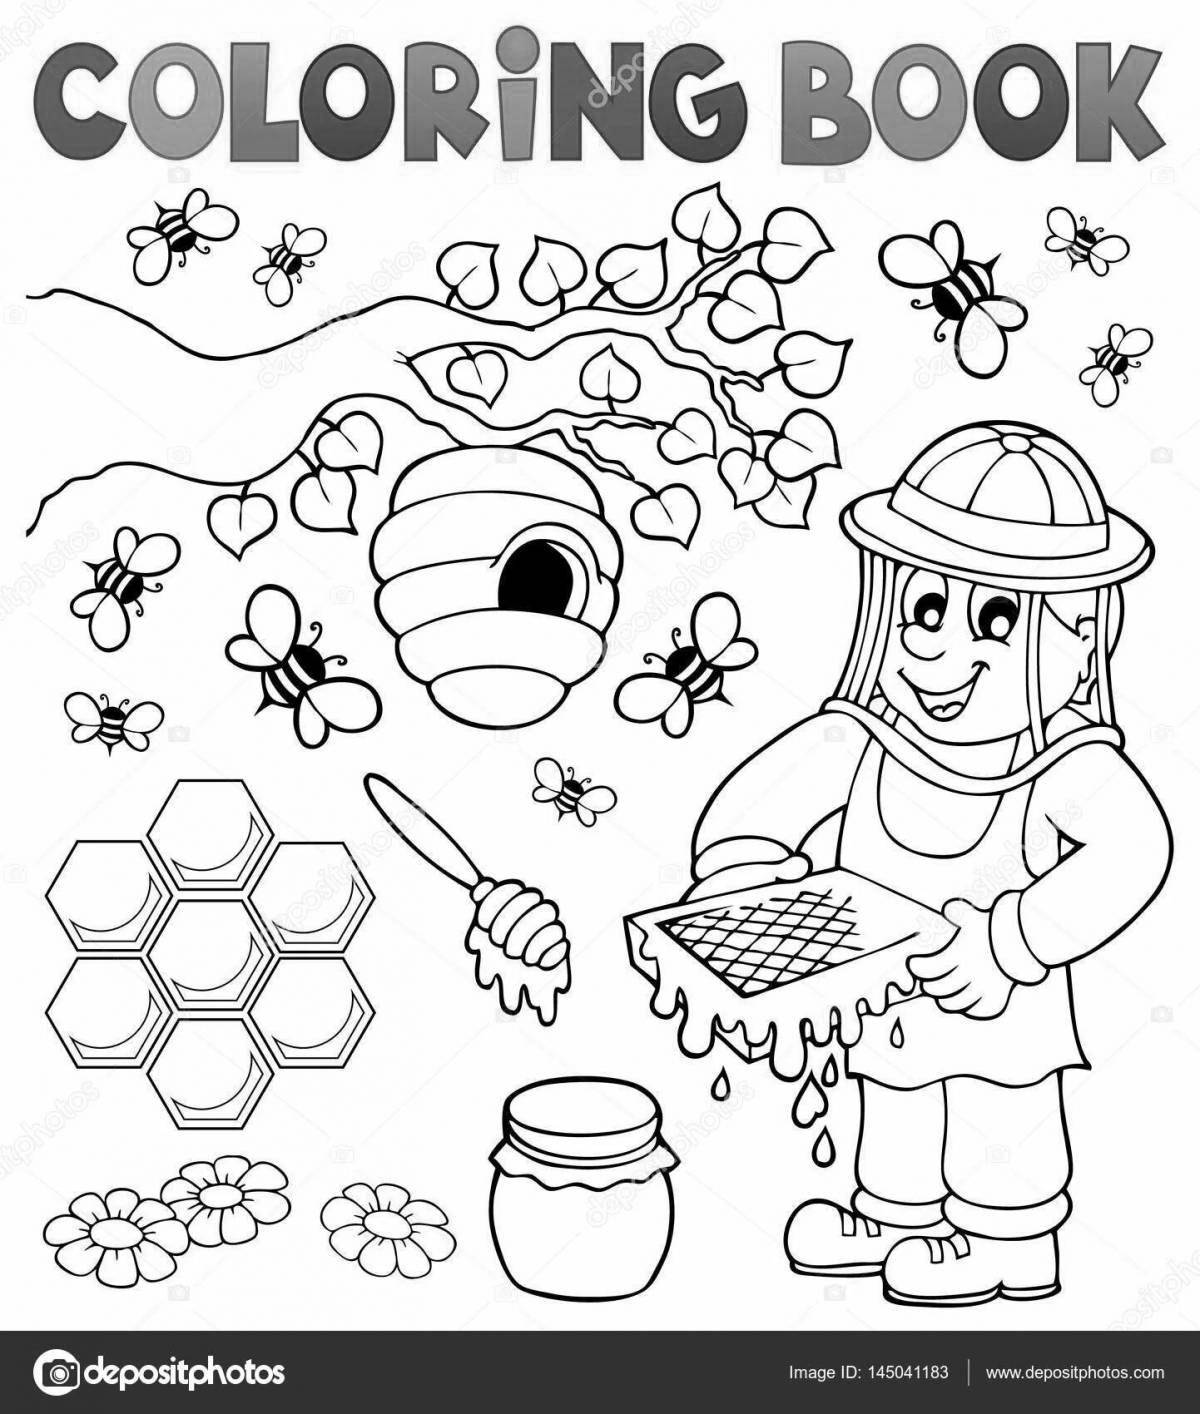 Coloring book brave beekeeper